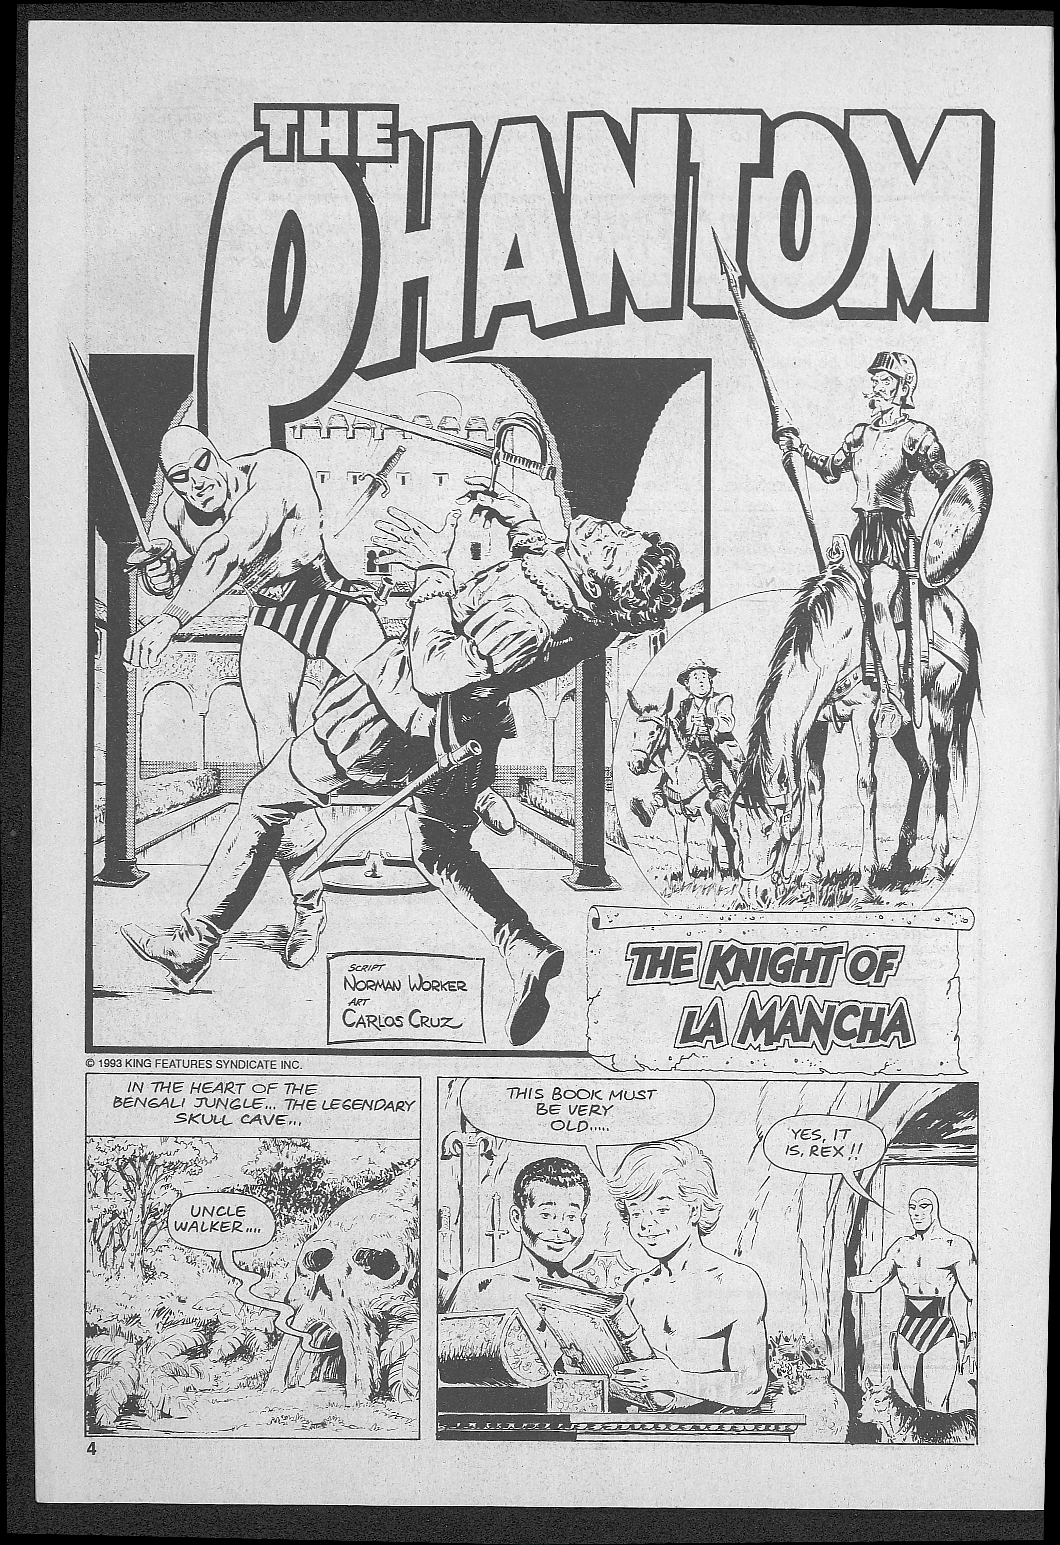 The Knight of La Mancha / script Norman Worker; art Carlos Cruz.     Publicado en:. The Phantom, Sydney: Frew Publications, 1993Nº1037,32 p.